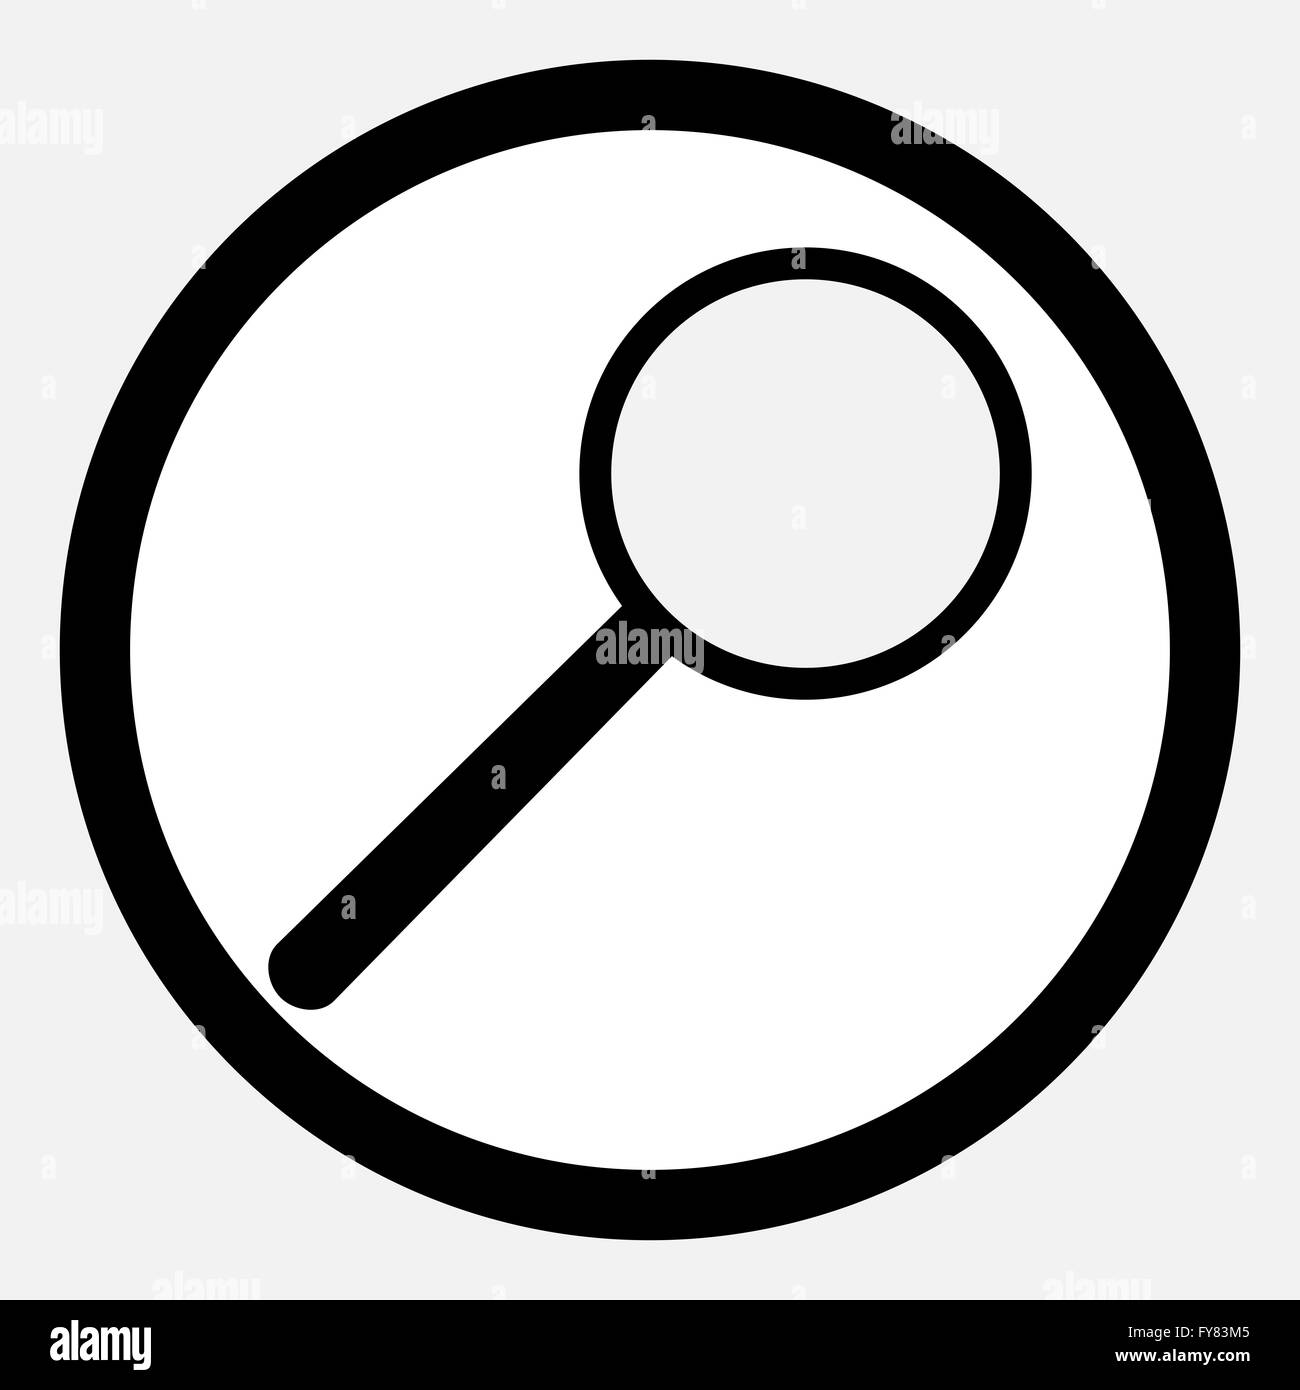 Analisi icona lente di ingrandimento. Icona della lente di ingrandimento e di ricerca, lente di ingrandimento e vettore di ricerca di analisi o di ricerca. Vect Foto Stock